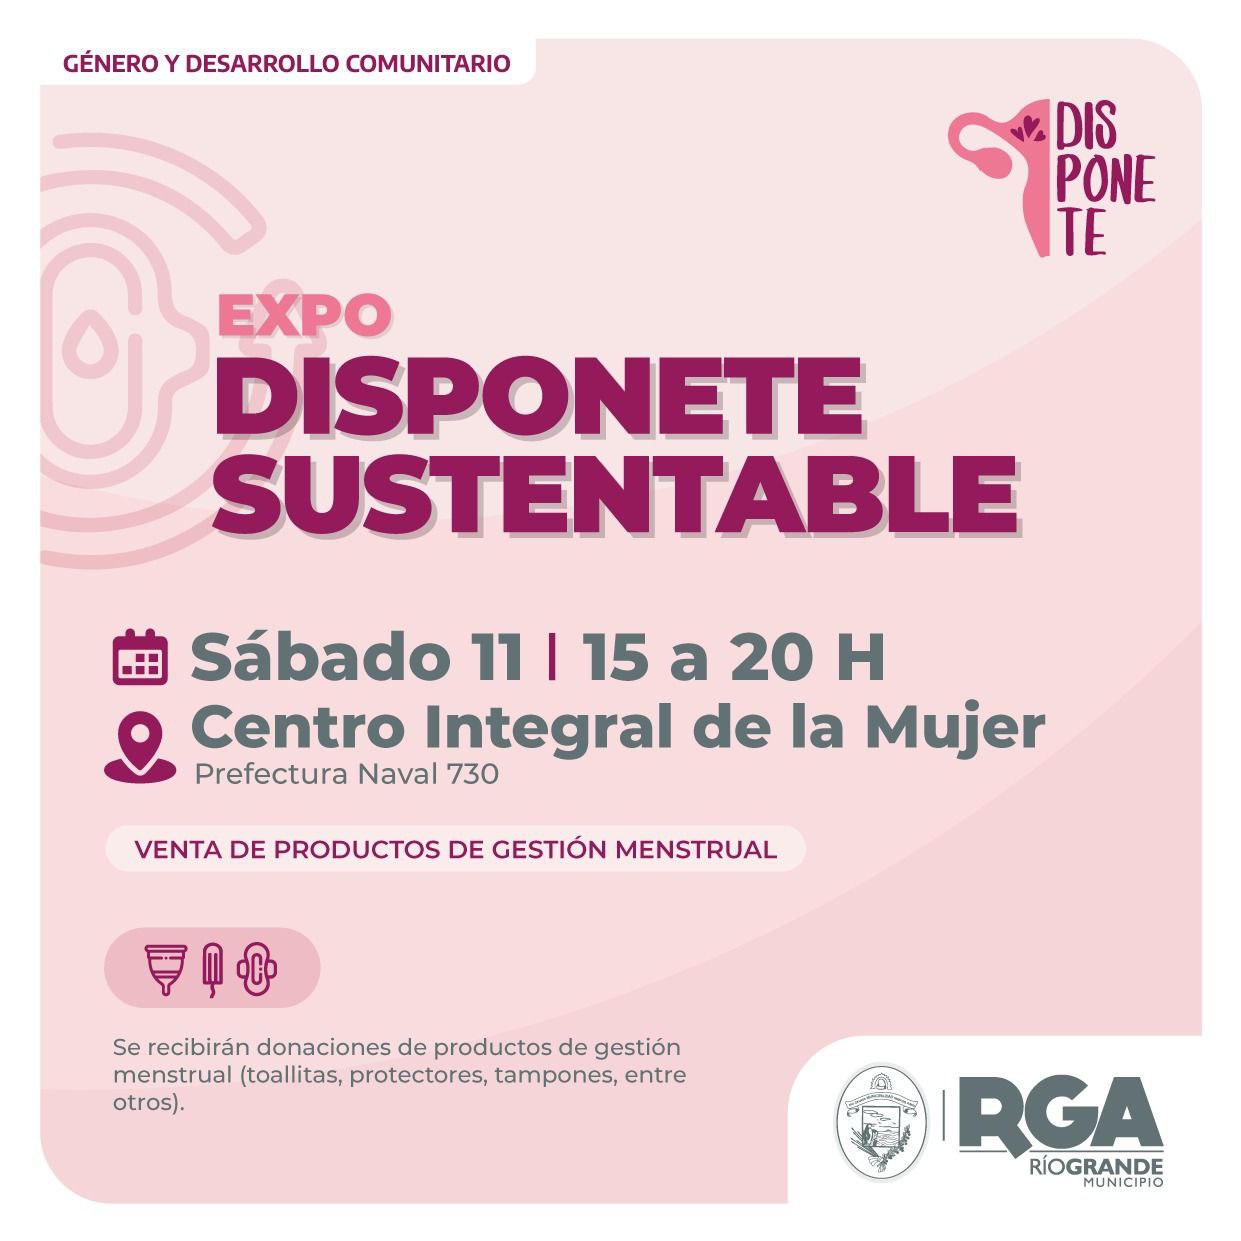 Expo "Disponete sustentable"